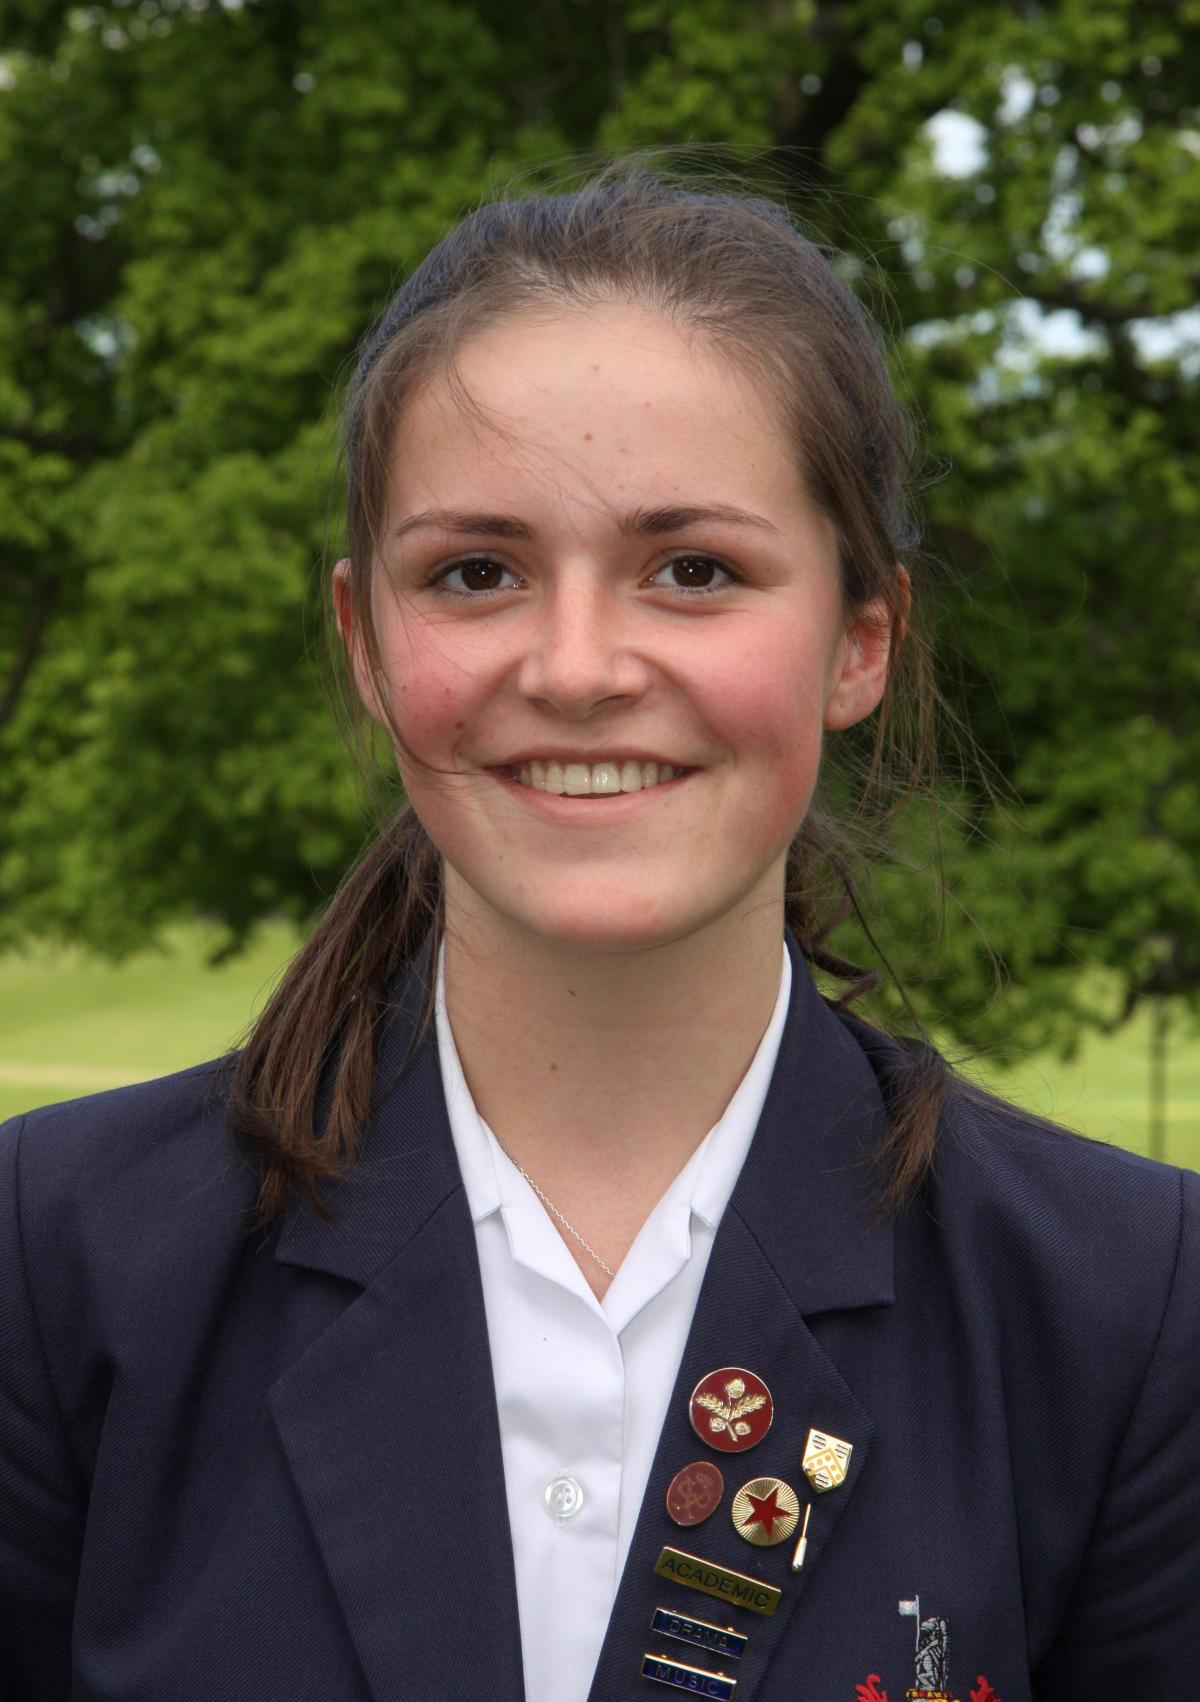 MALVERN COLLEGE: Amelia Wilson scored 12 A*s at GCSE. Picture by Malvern College.